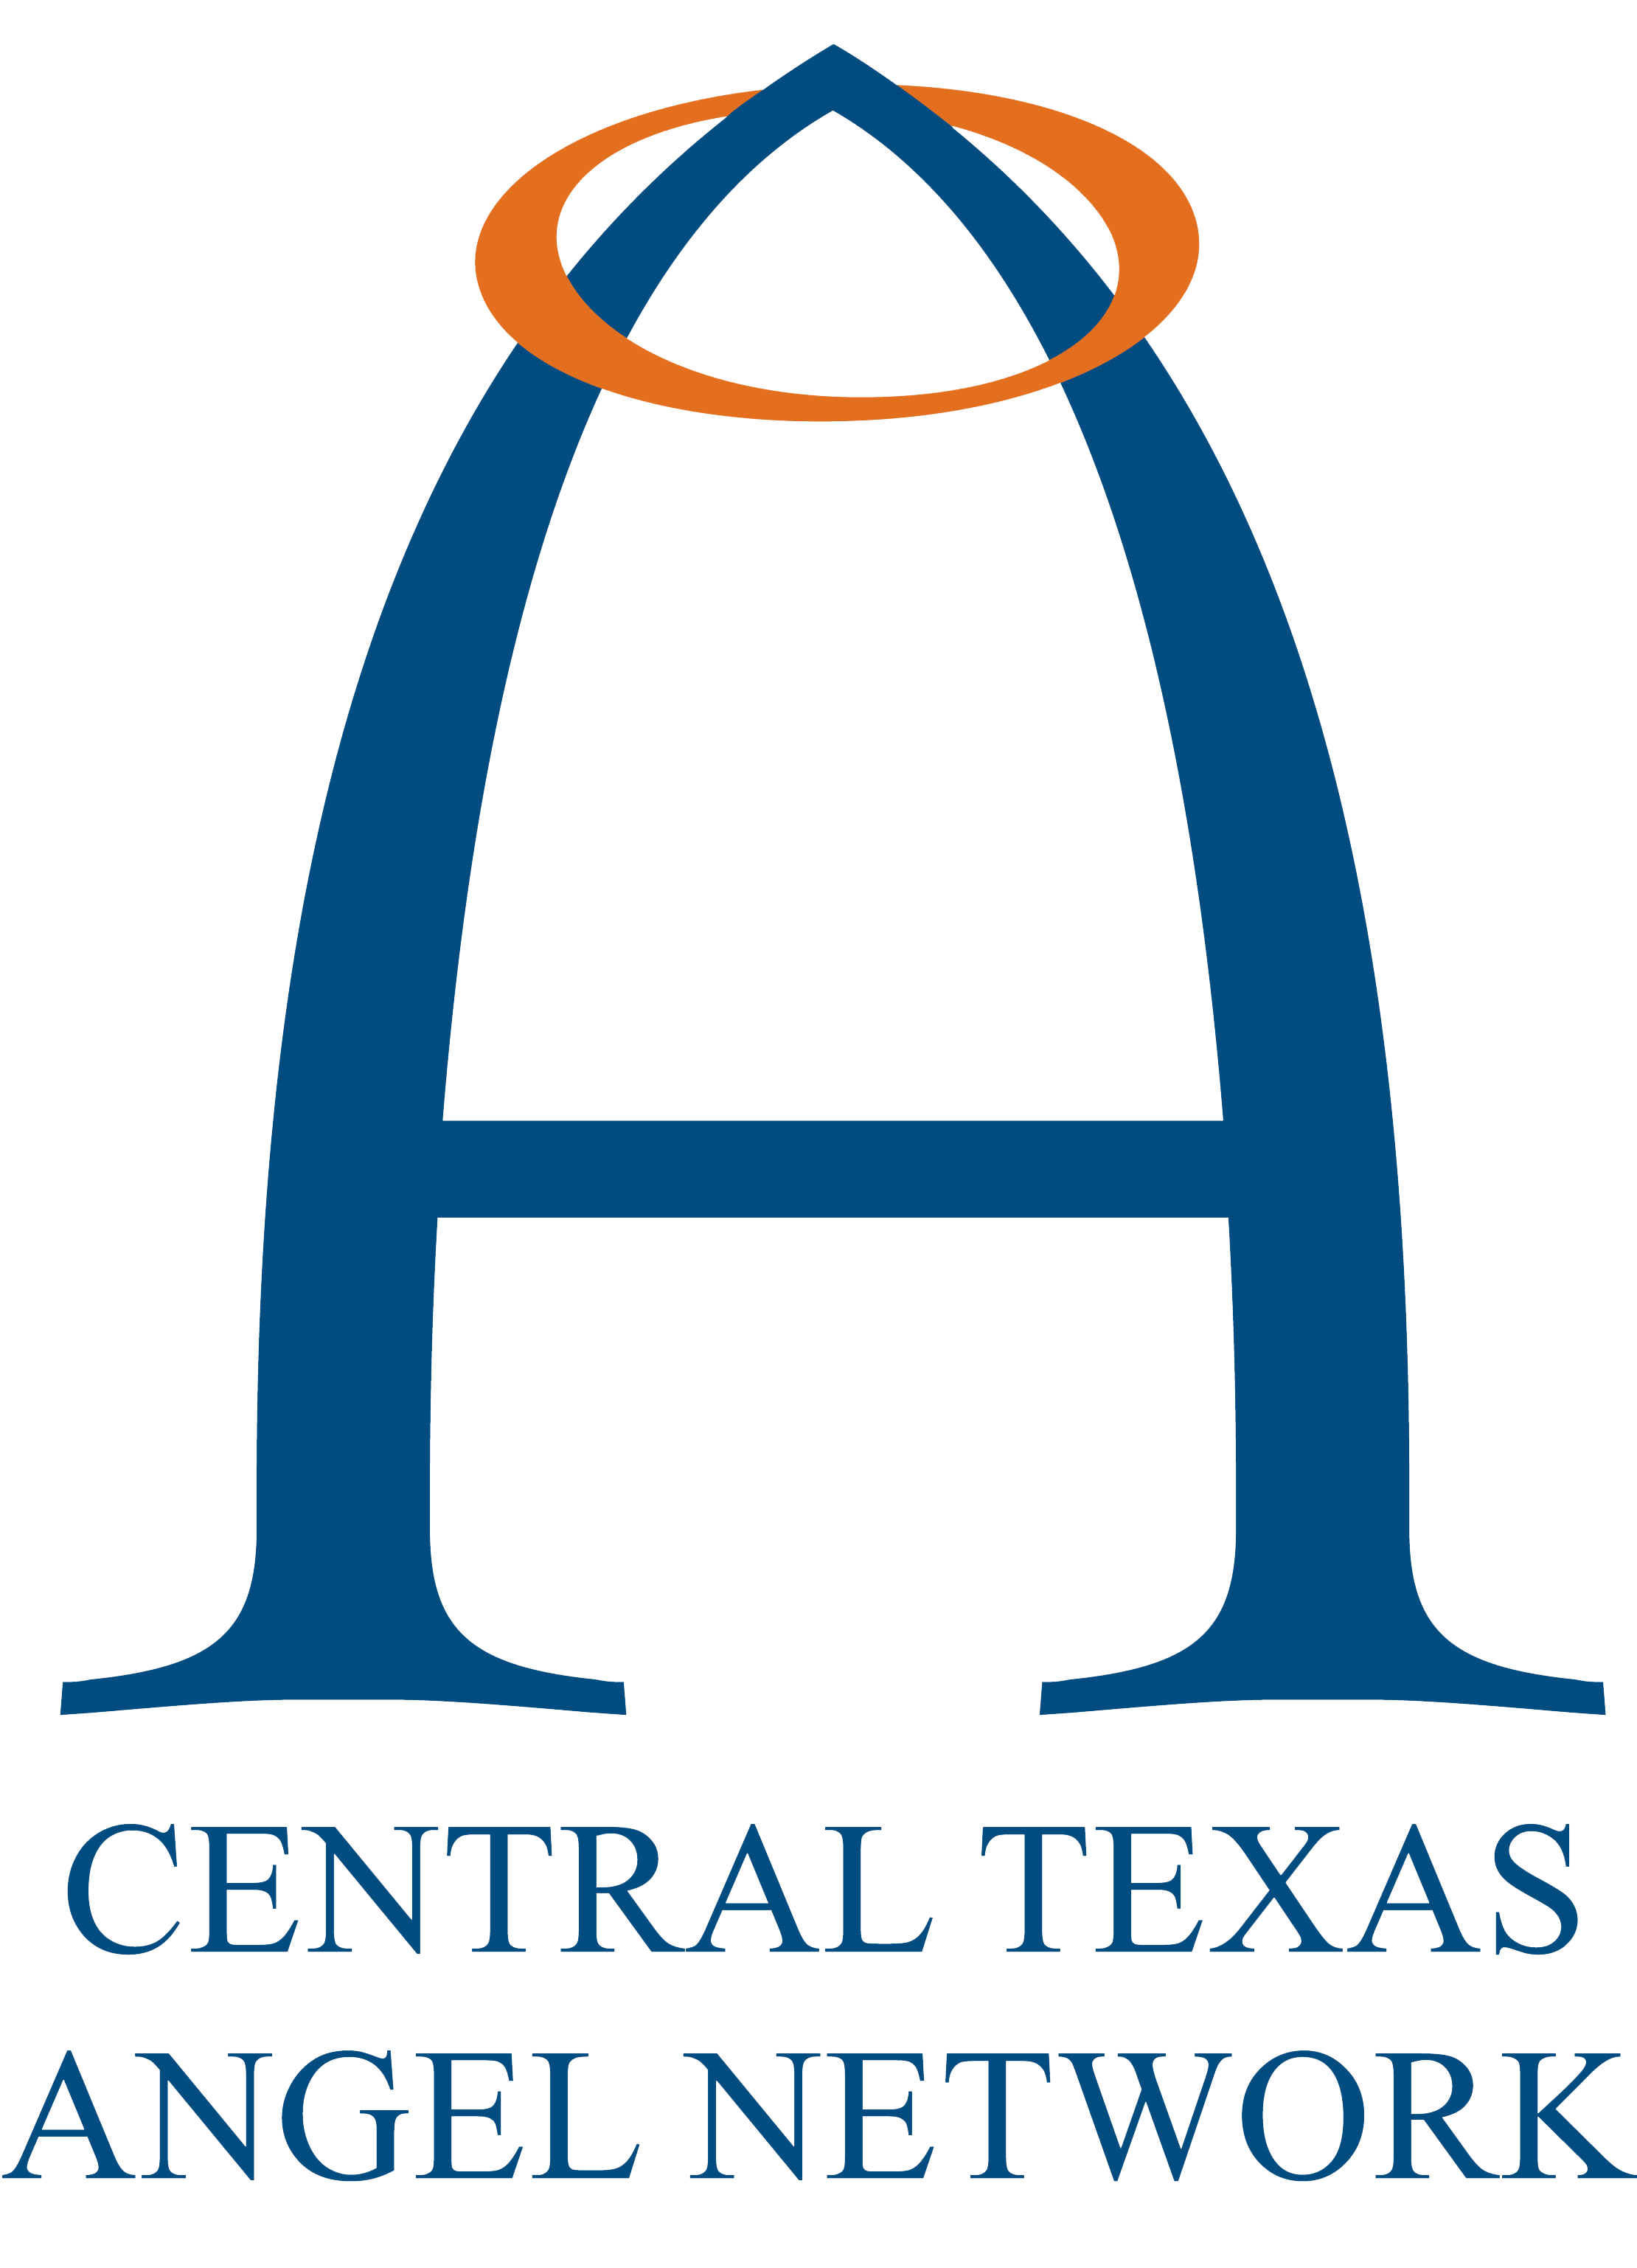 Central Texas Angel Network (CTAN